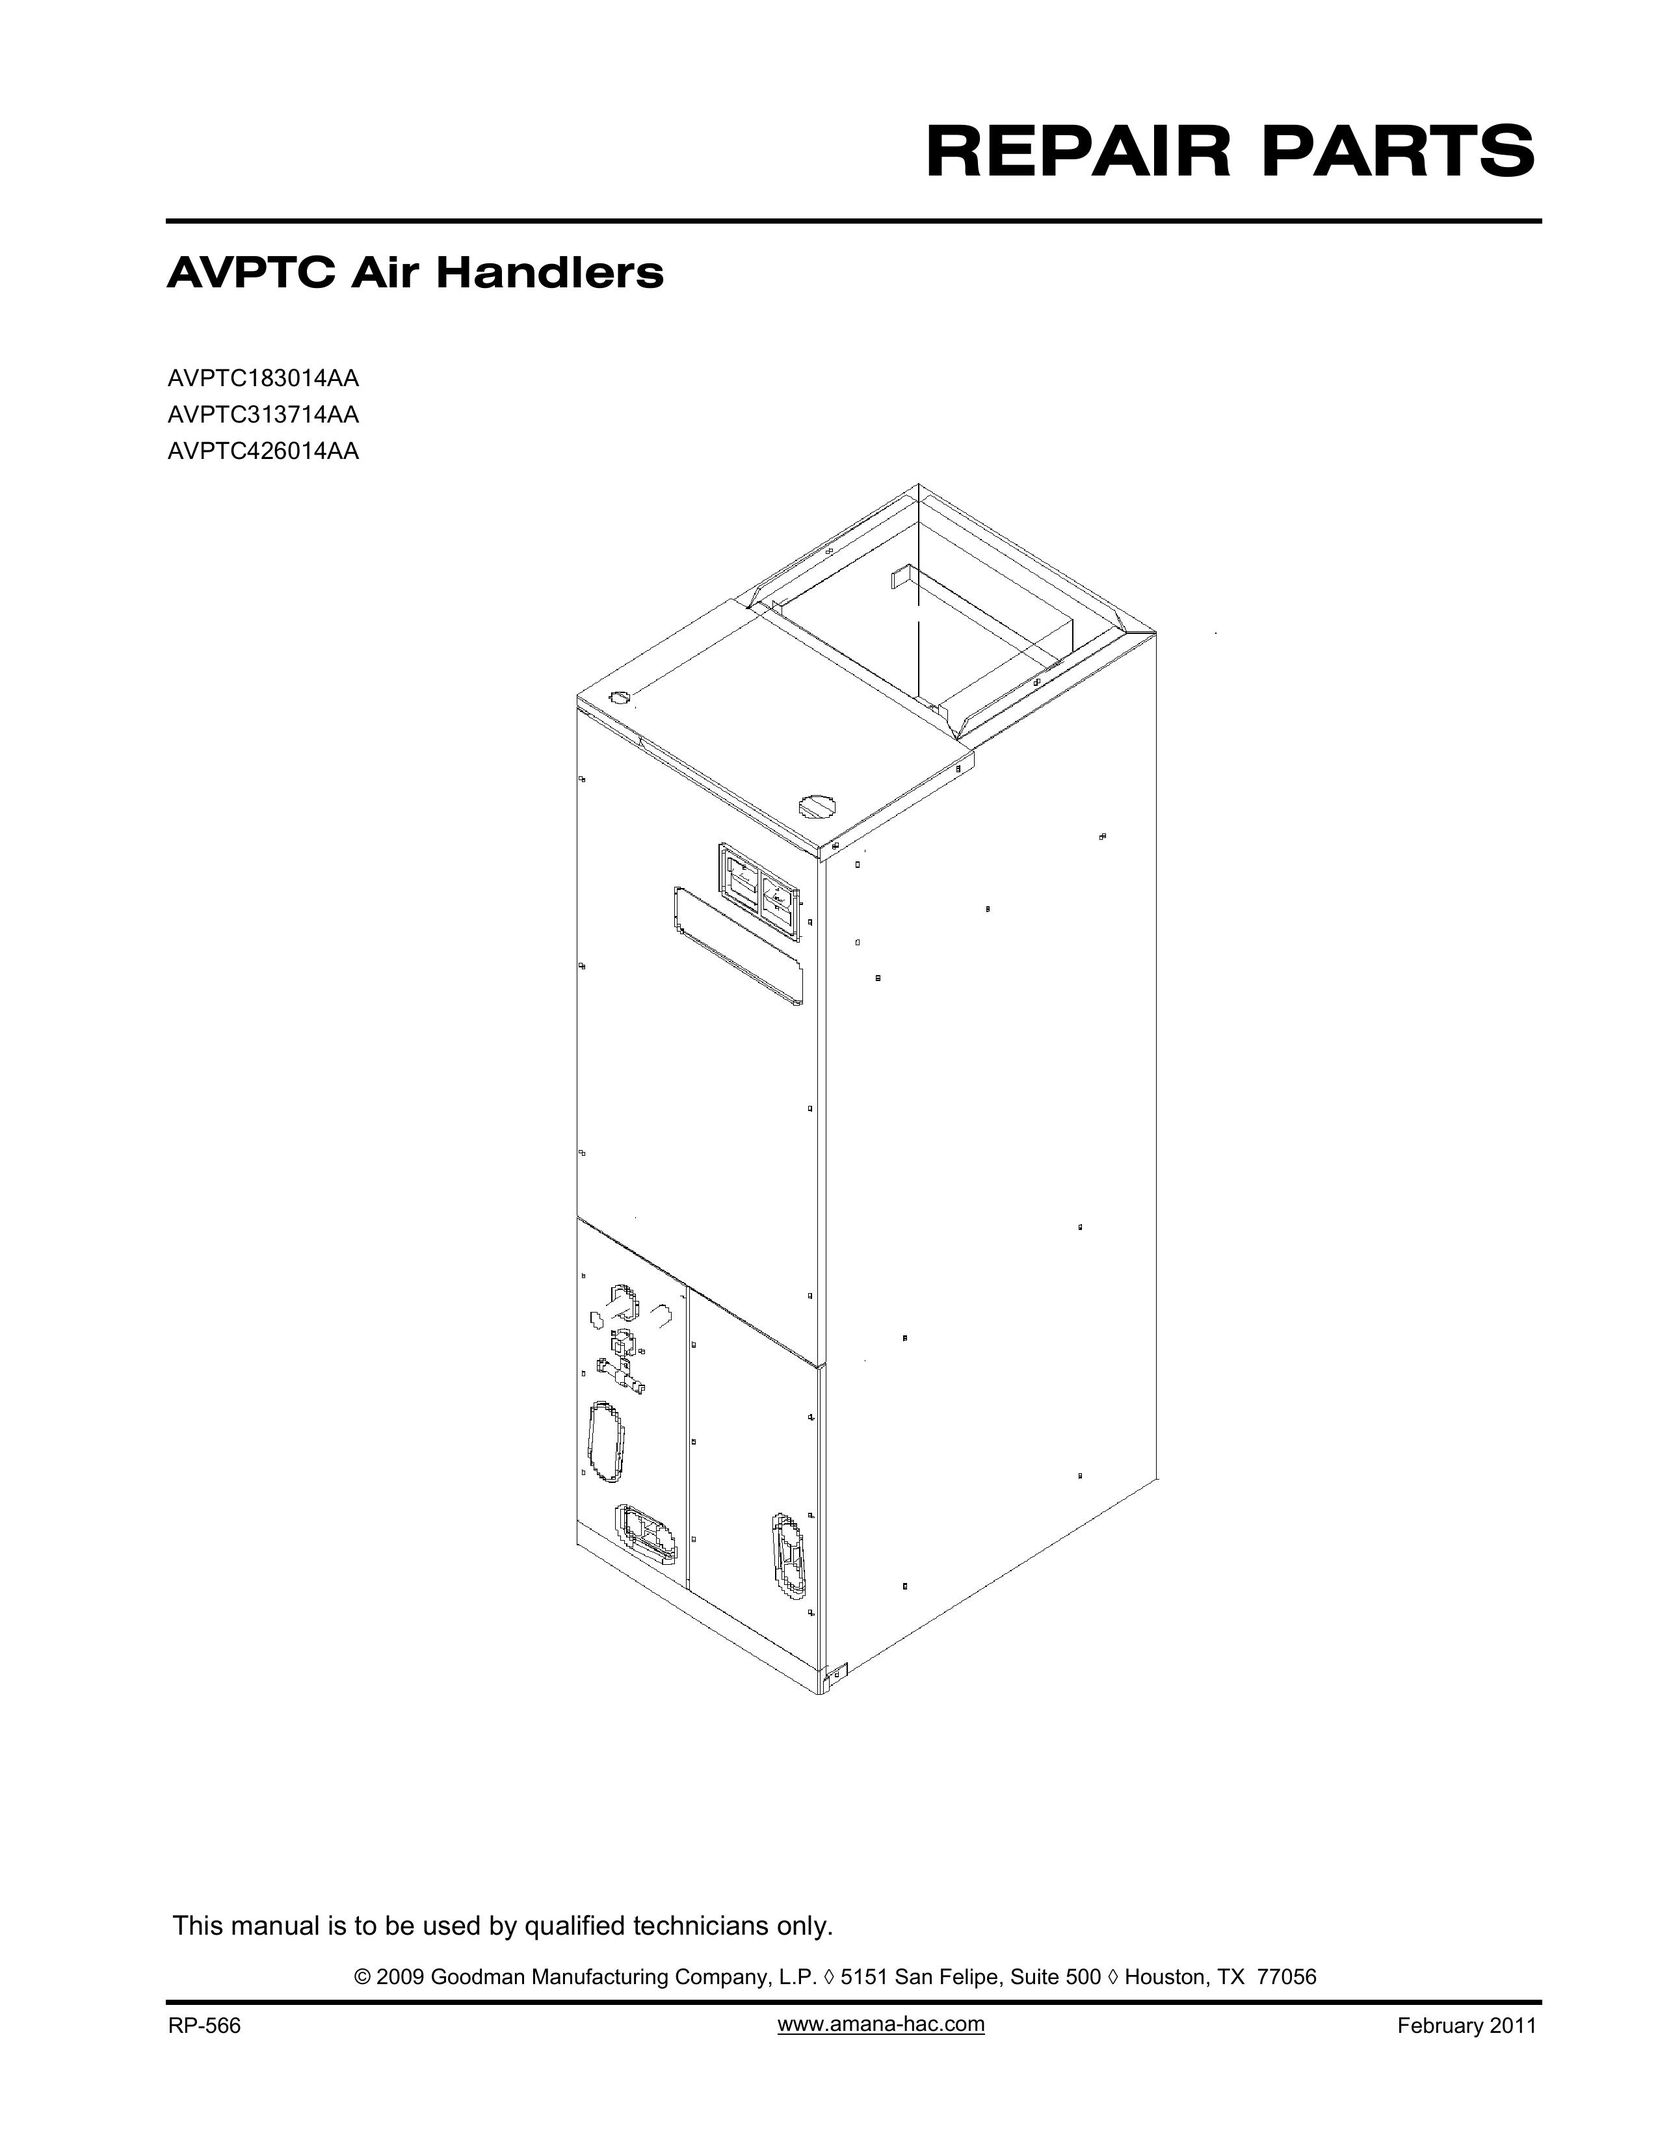 Goodman Mfg AVPTC313714AA Air Conditioner User Manual